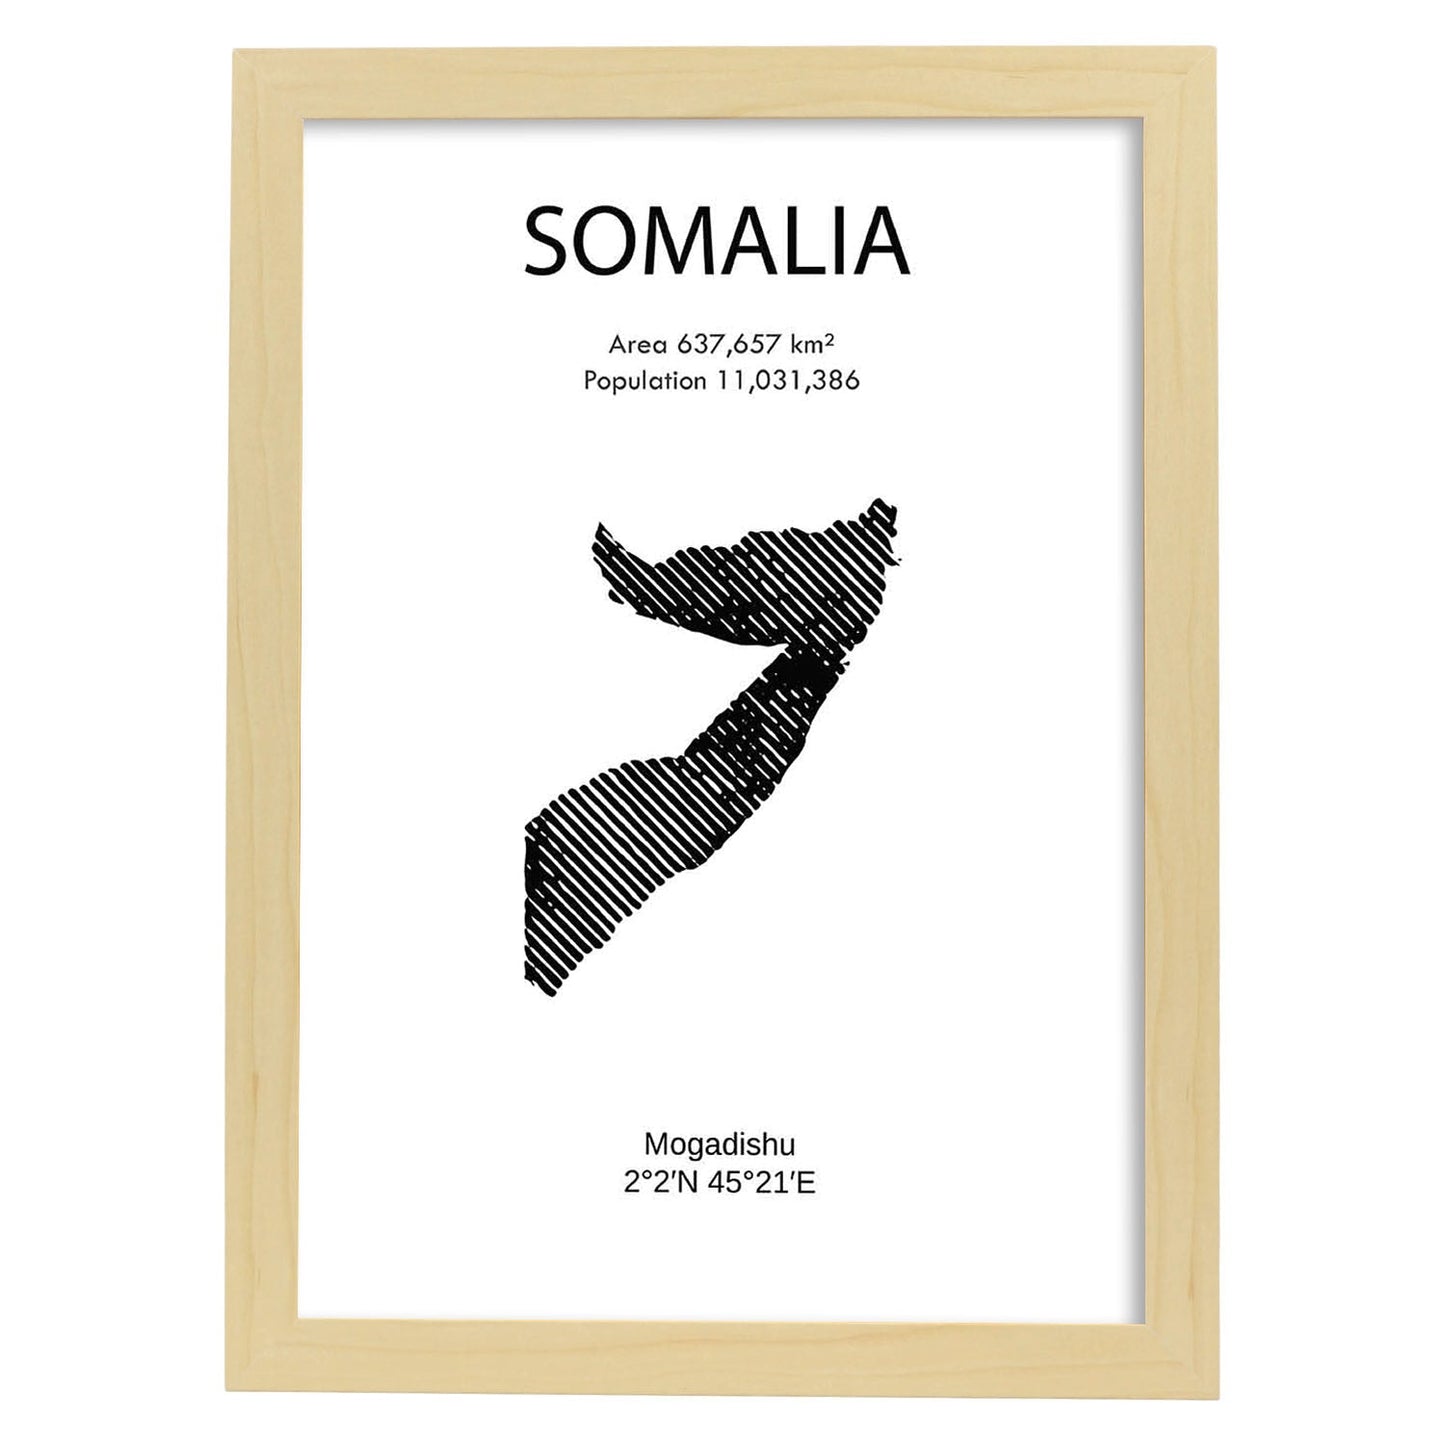 Poster de Somalia. Láminas de paises y continentes del mundo.-Artwork-Nacnic-A4-Marco Madera clara-Nacnic Estudio SL